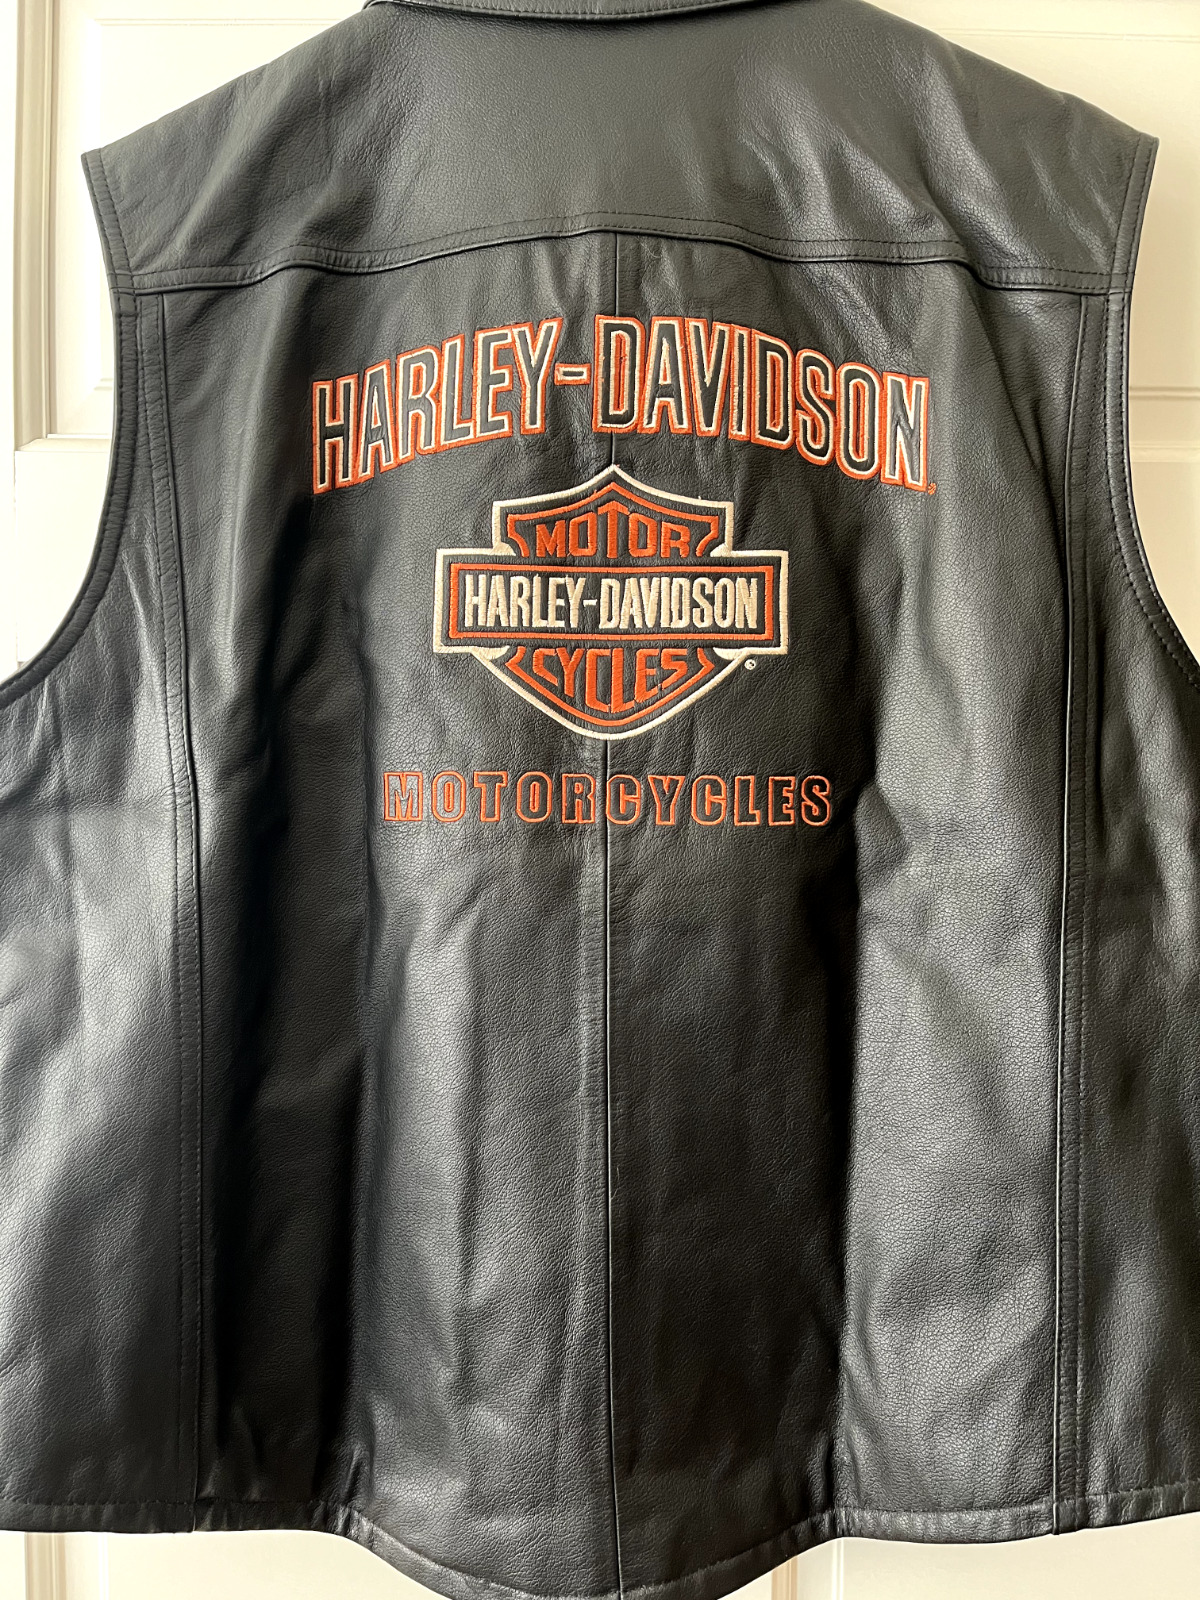 Harley Davidson Clothes Bundle - Vest, Chaps, Shirts, Heated Riding Jacket